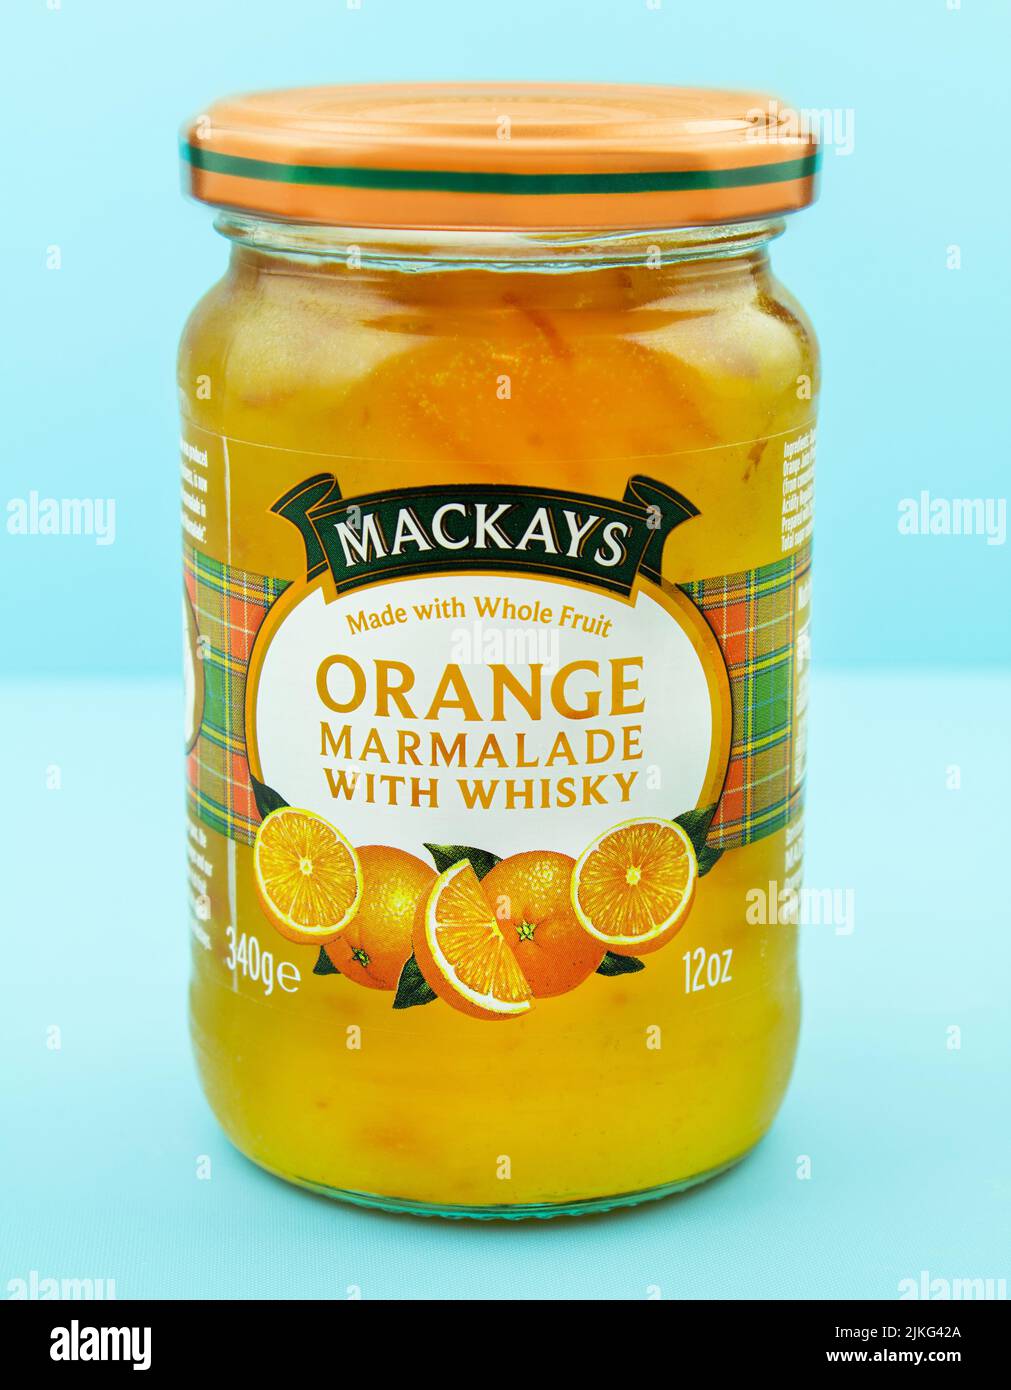 Marmalata arancione Mackays con Whiskey Foto Stock